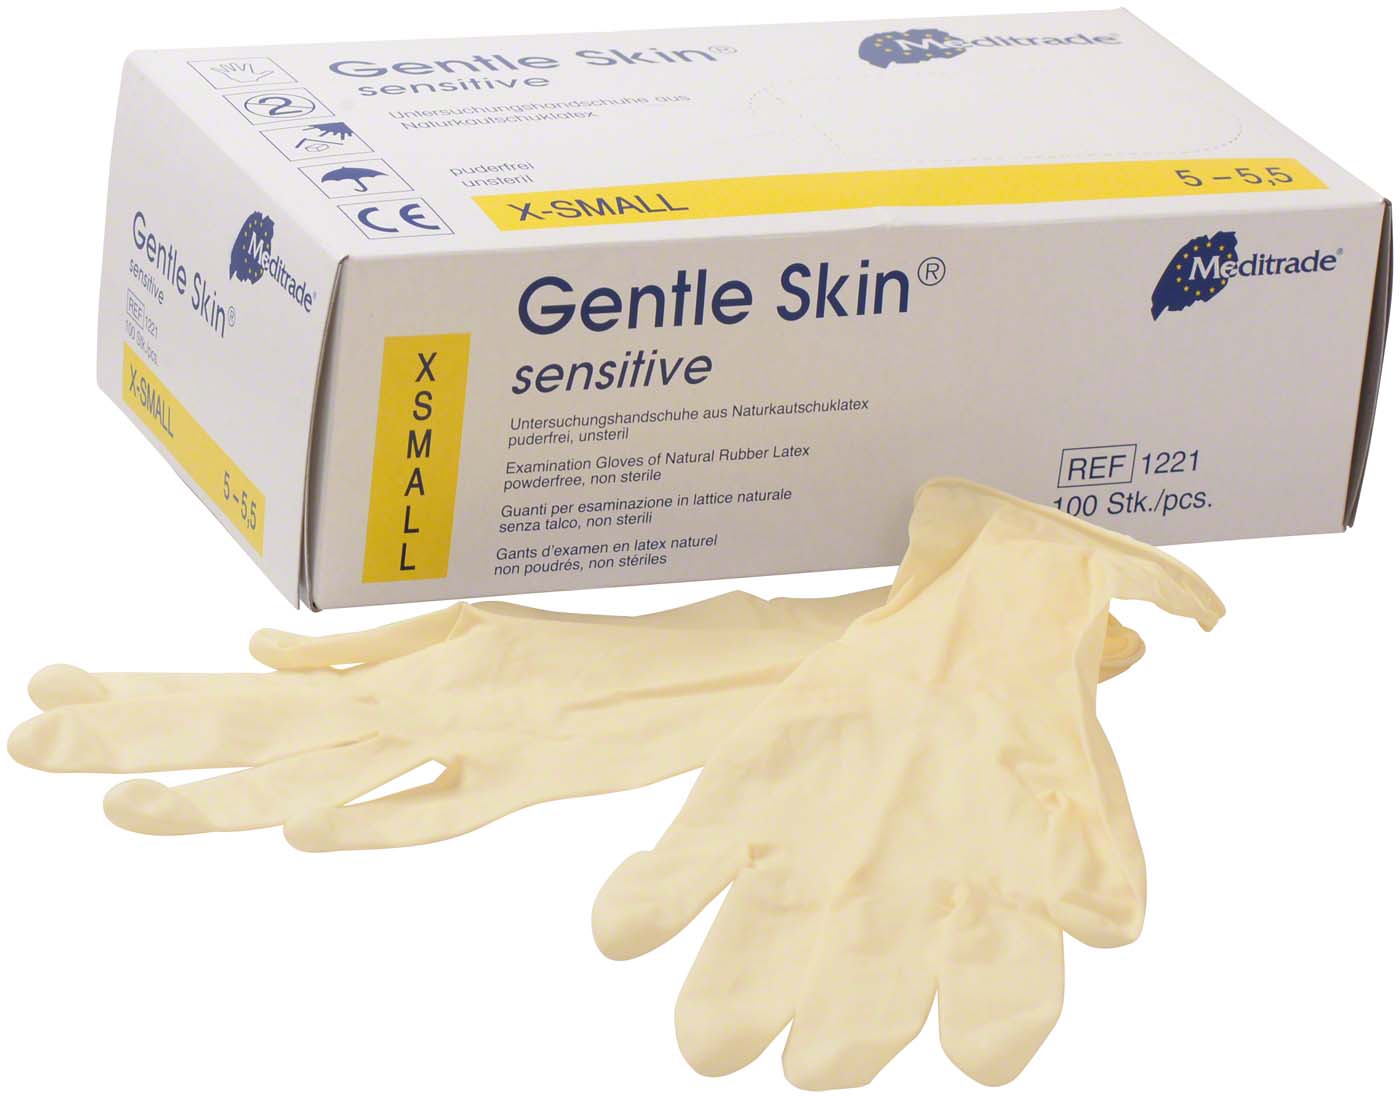 Gentle Skin® sensitive Meditrade